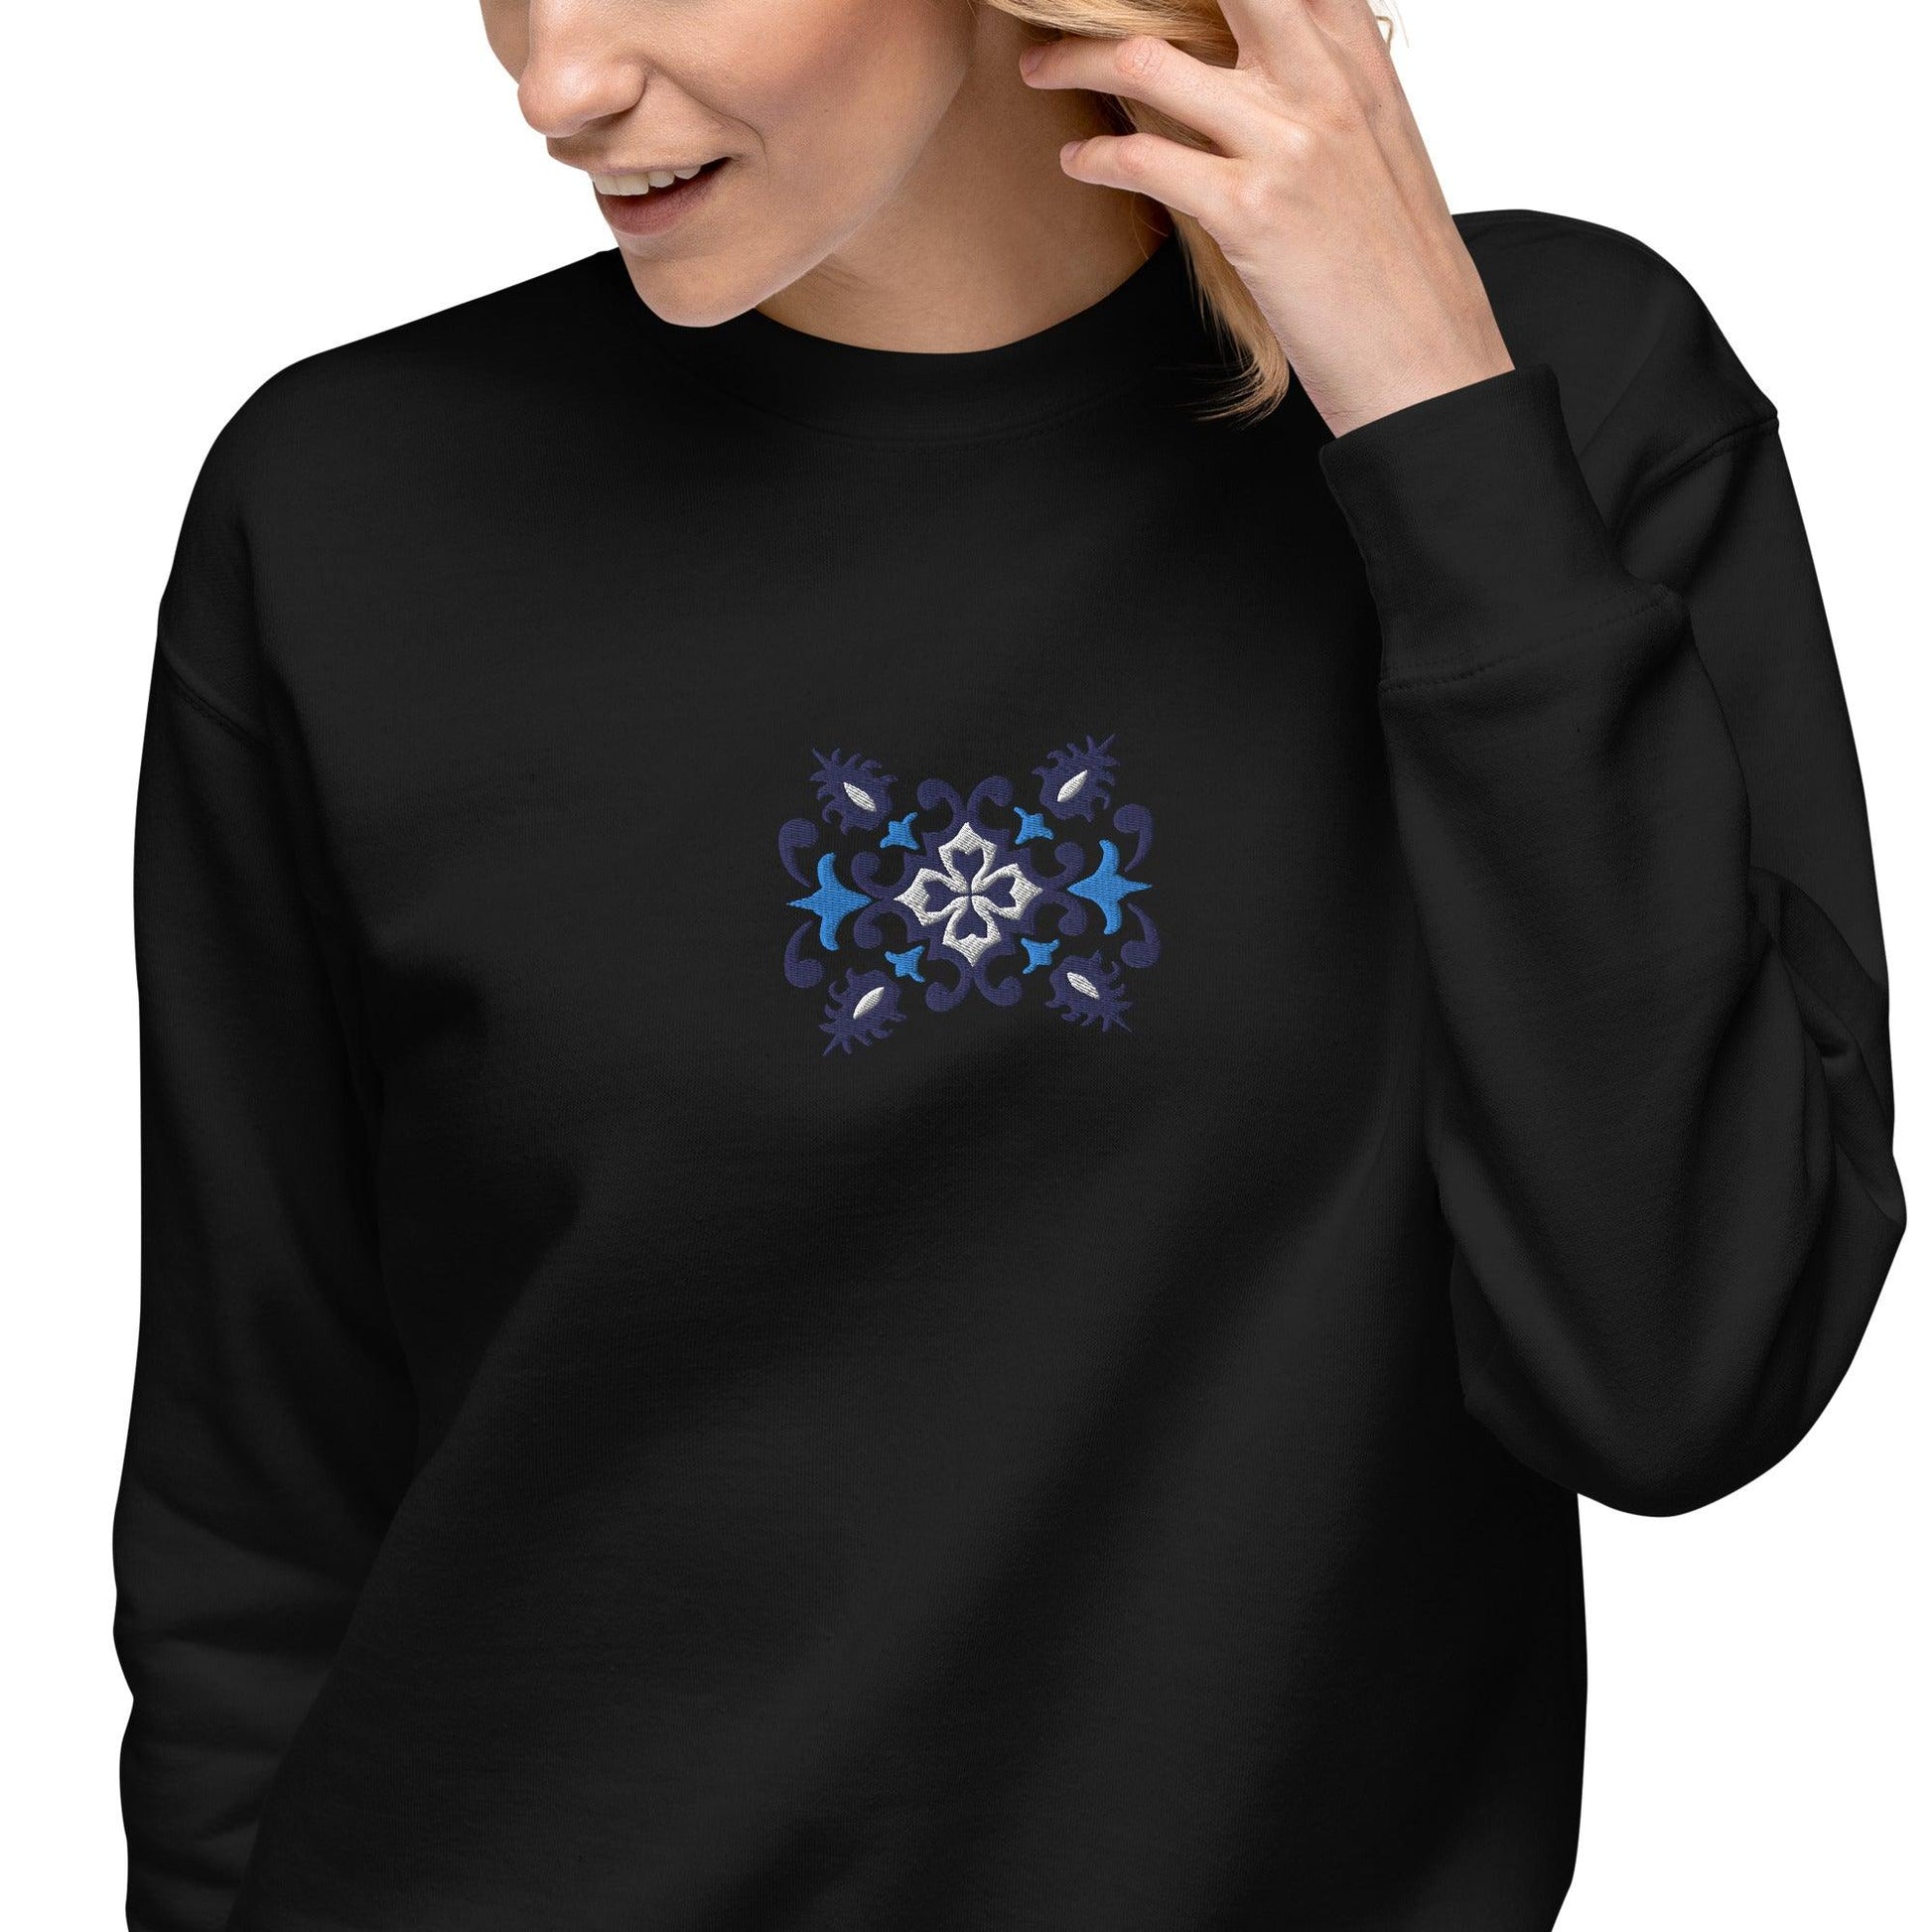 Portuguese Azulejo Tile Motif Embroidered Sweatshirt - The Global Wanderer